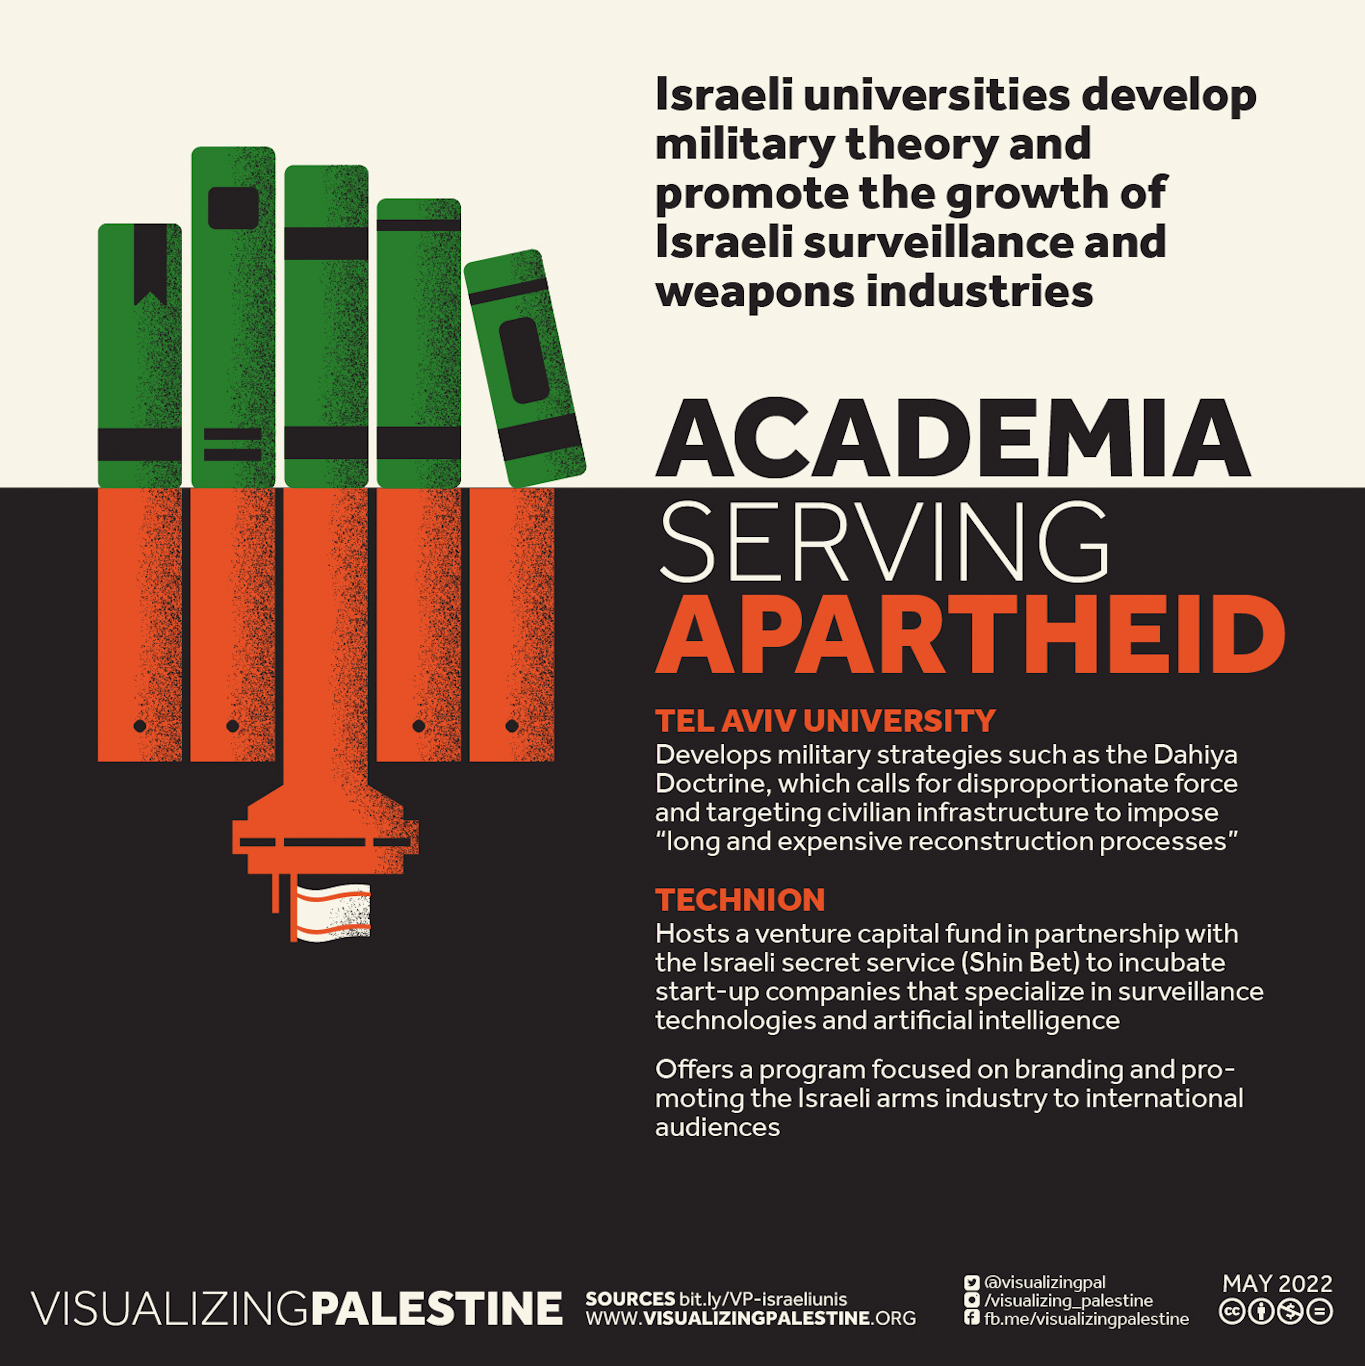 Israeli academic Aparthied